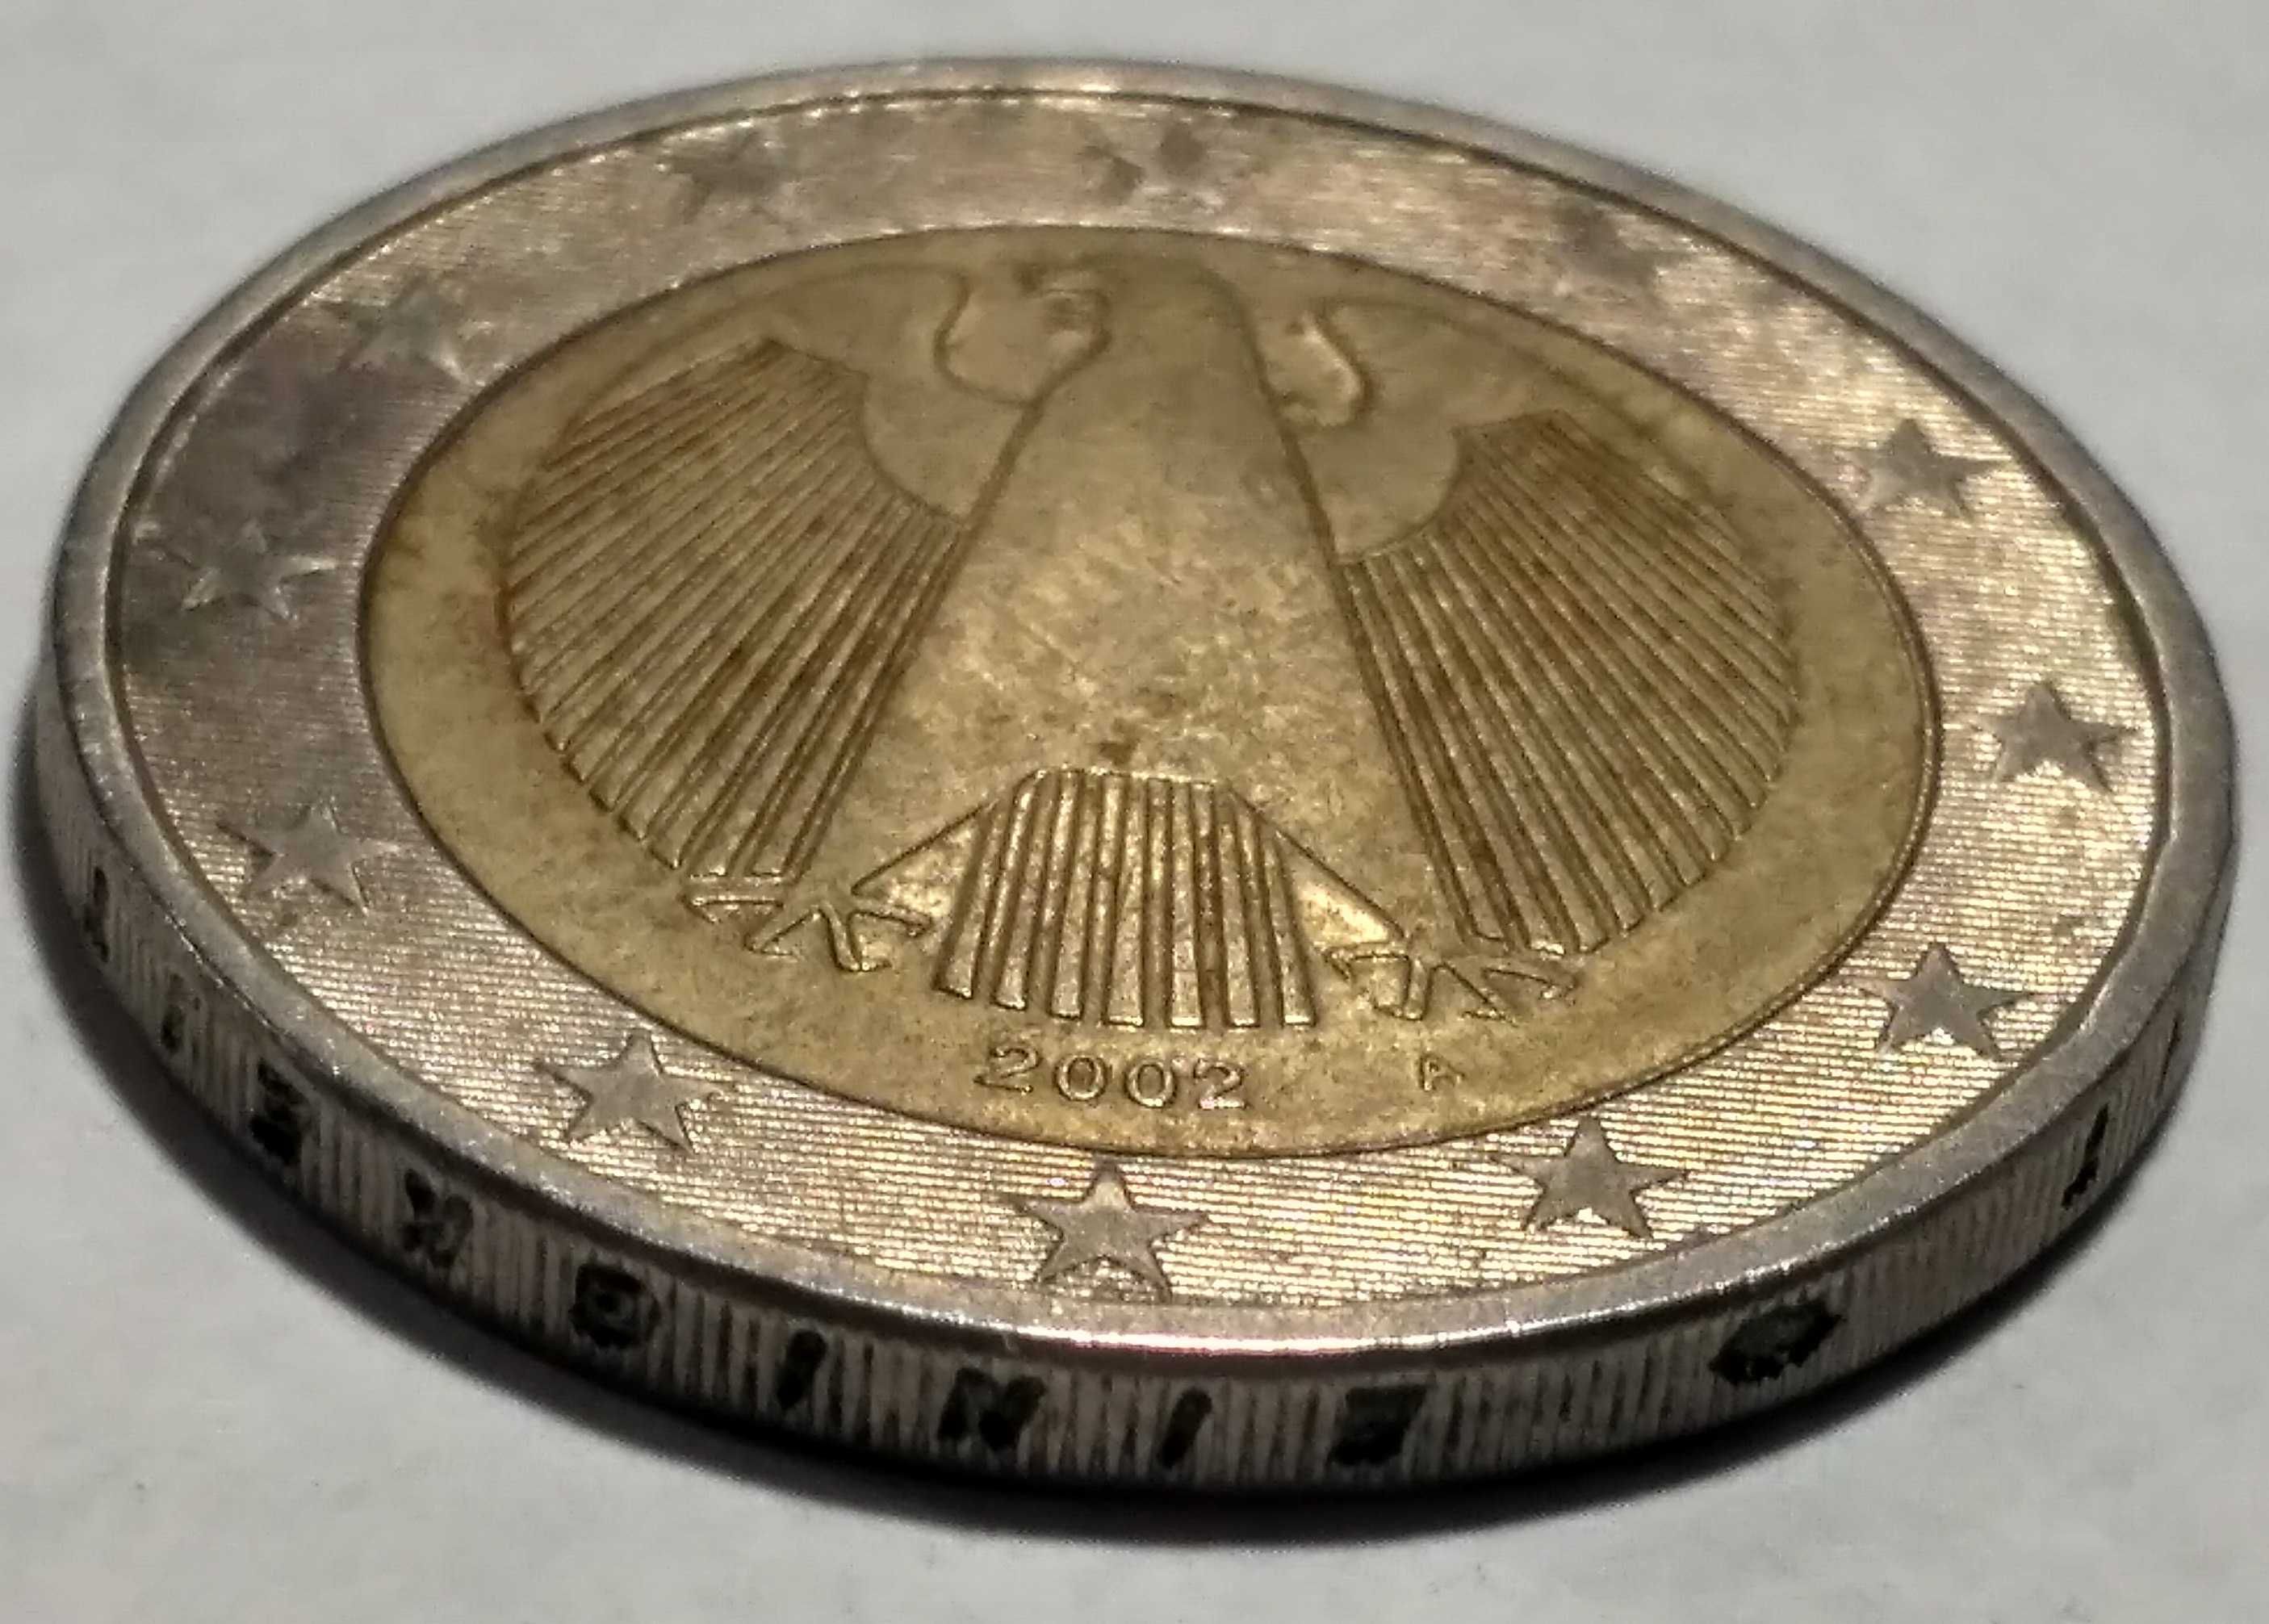 2 евро 2002 Германия